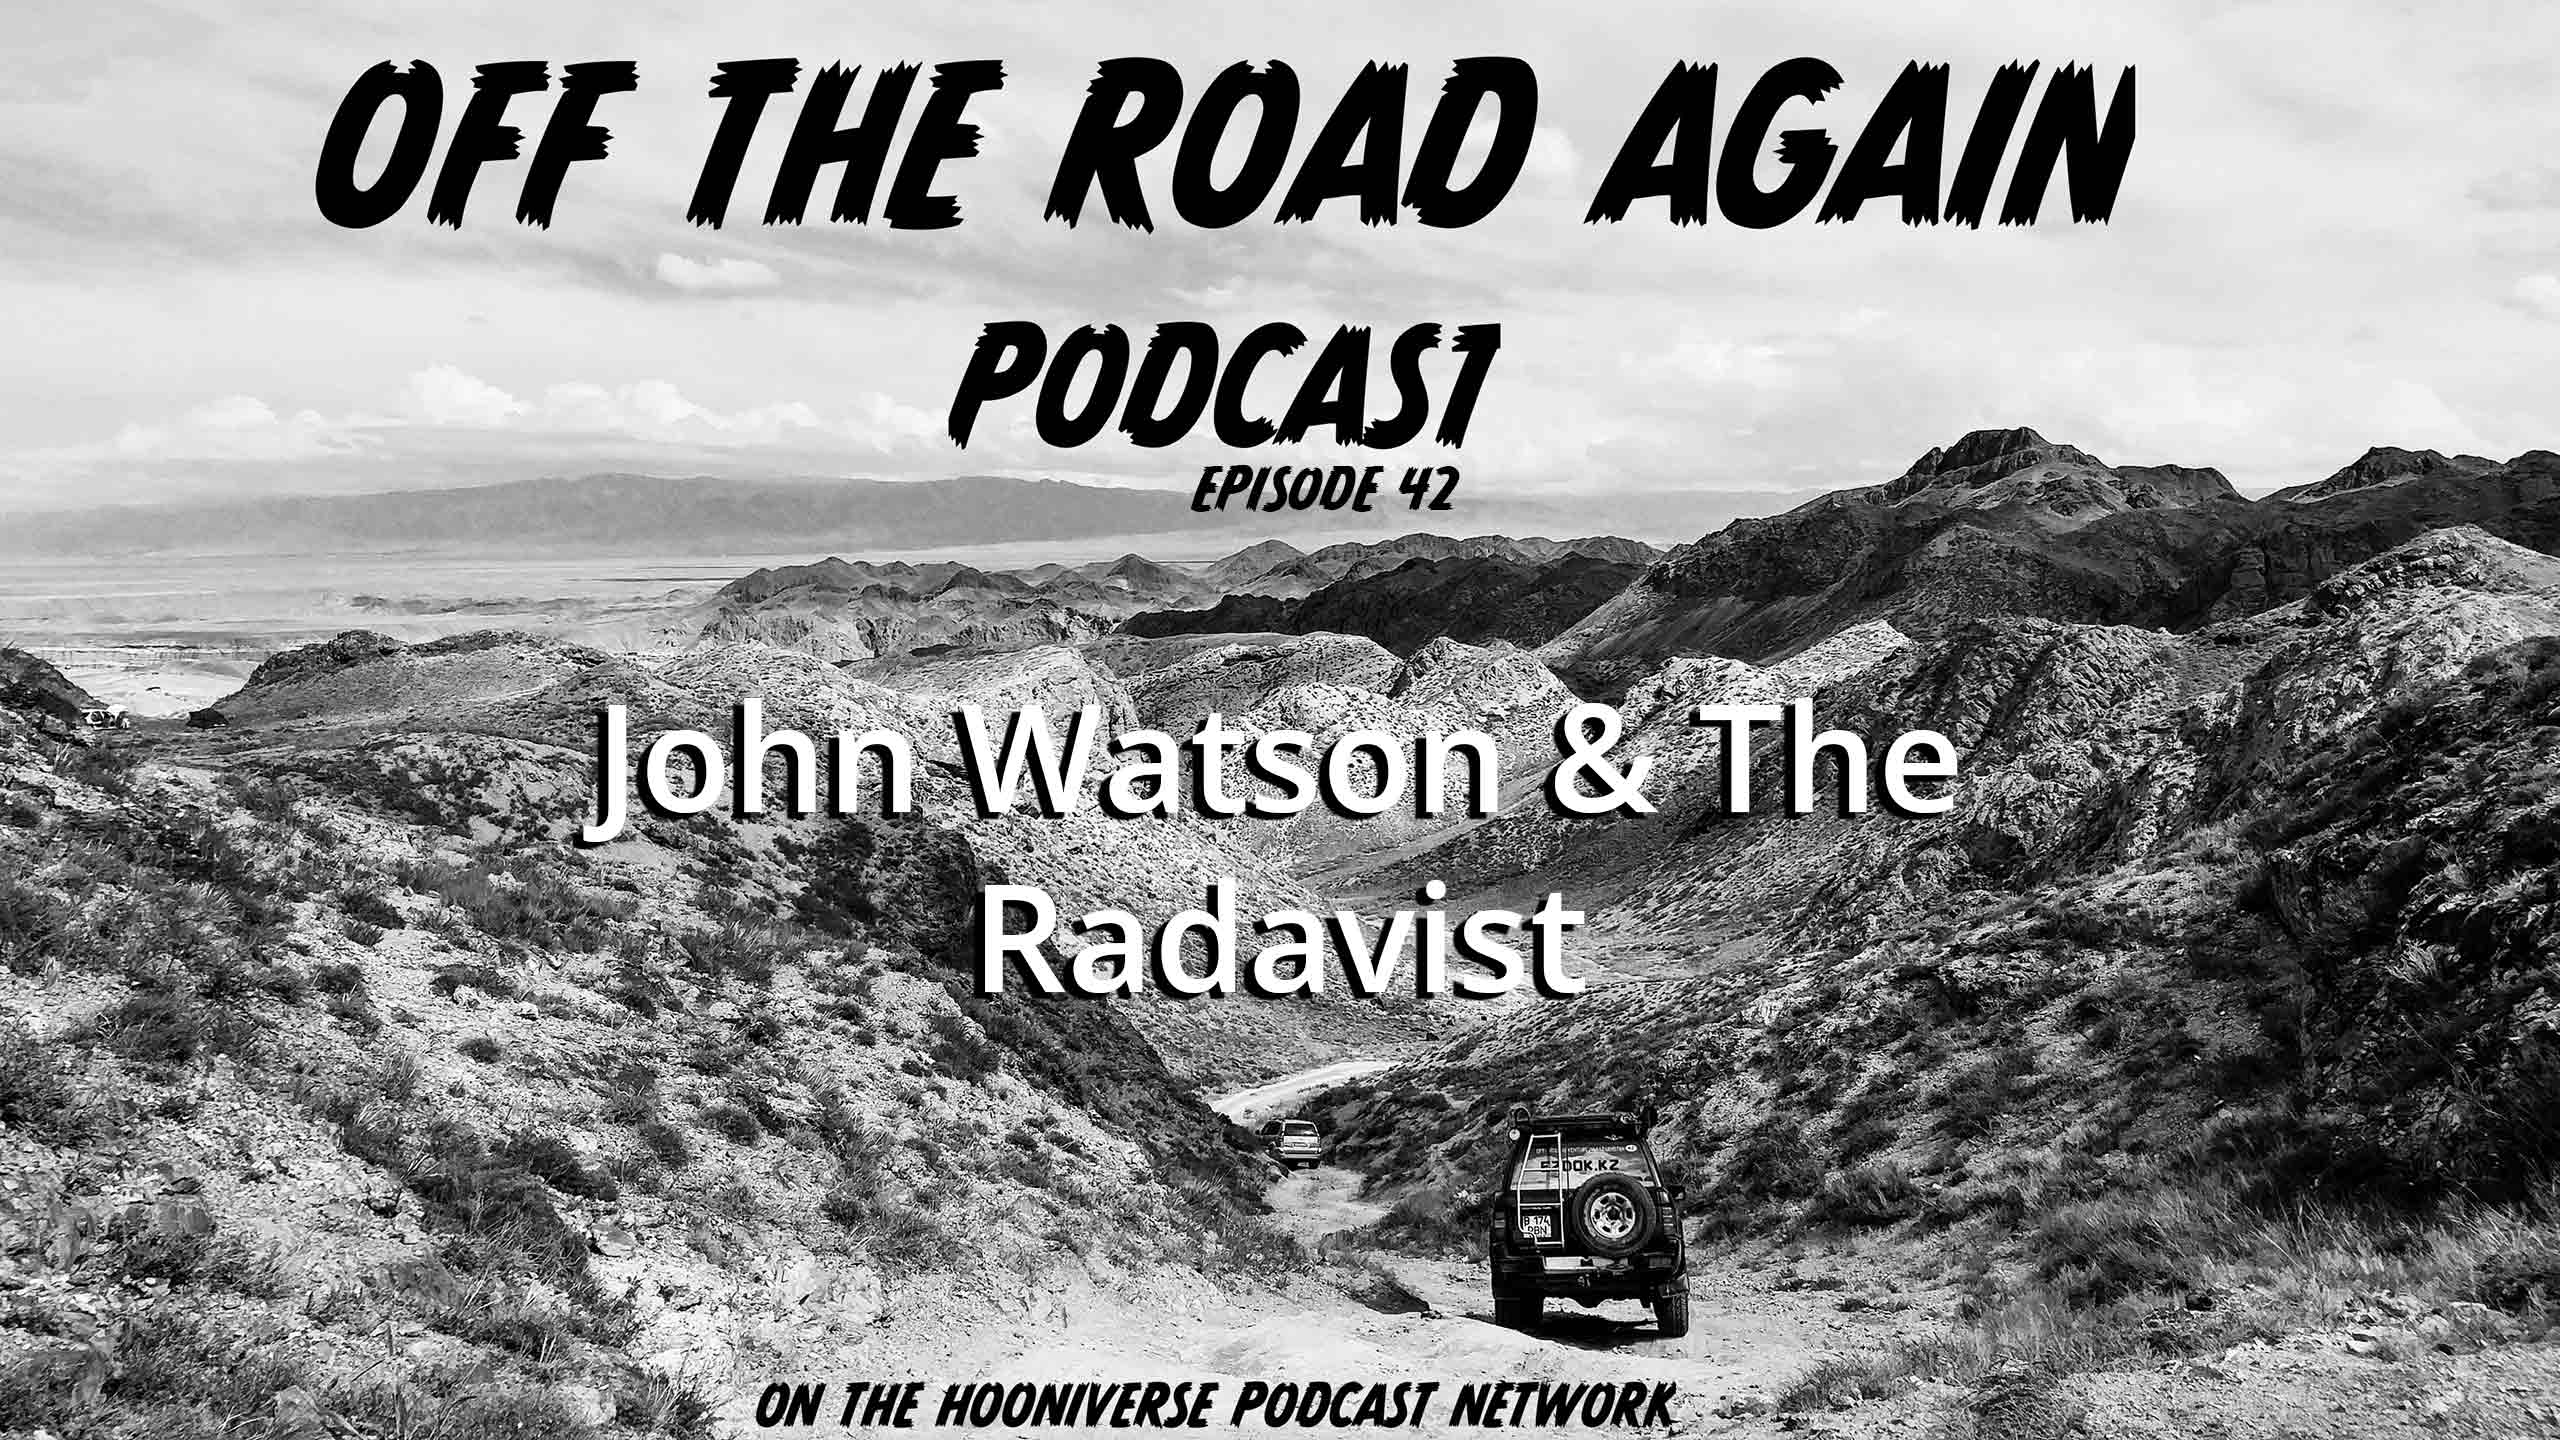 John-Watson-The-Radavist-Off-The-Road-Again-Podcast-Episode-42